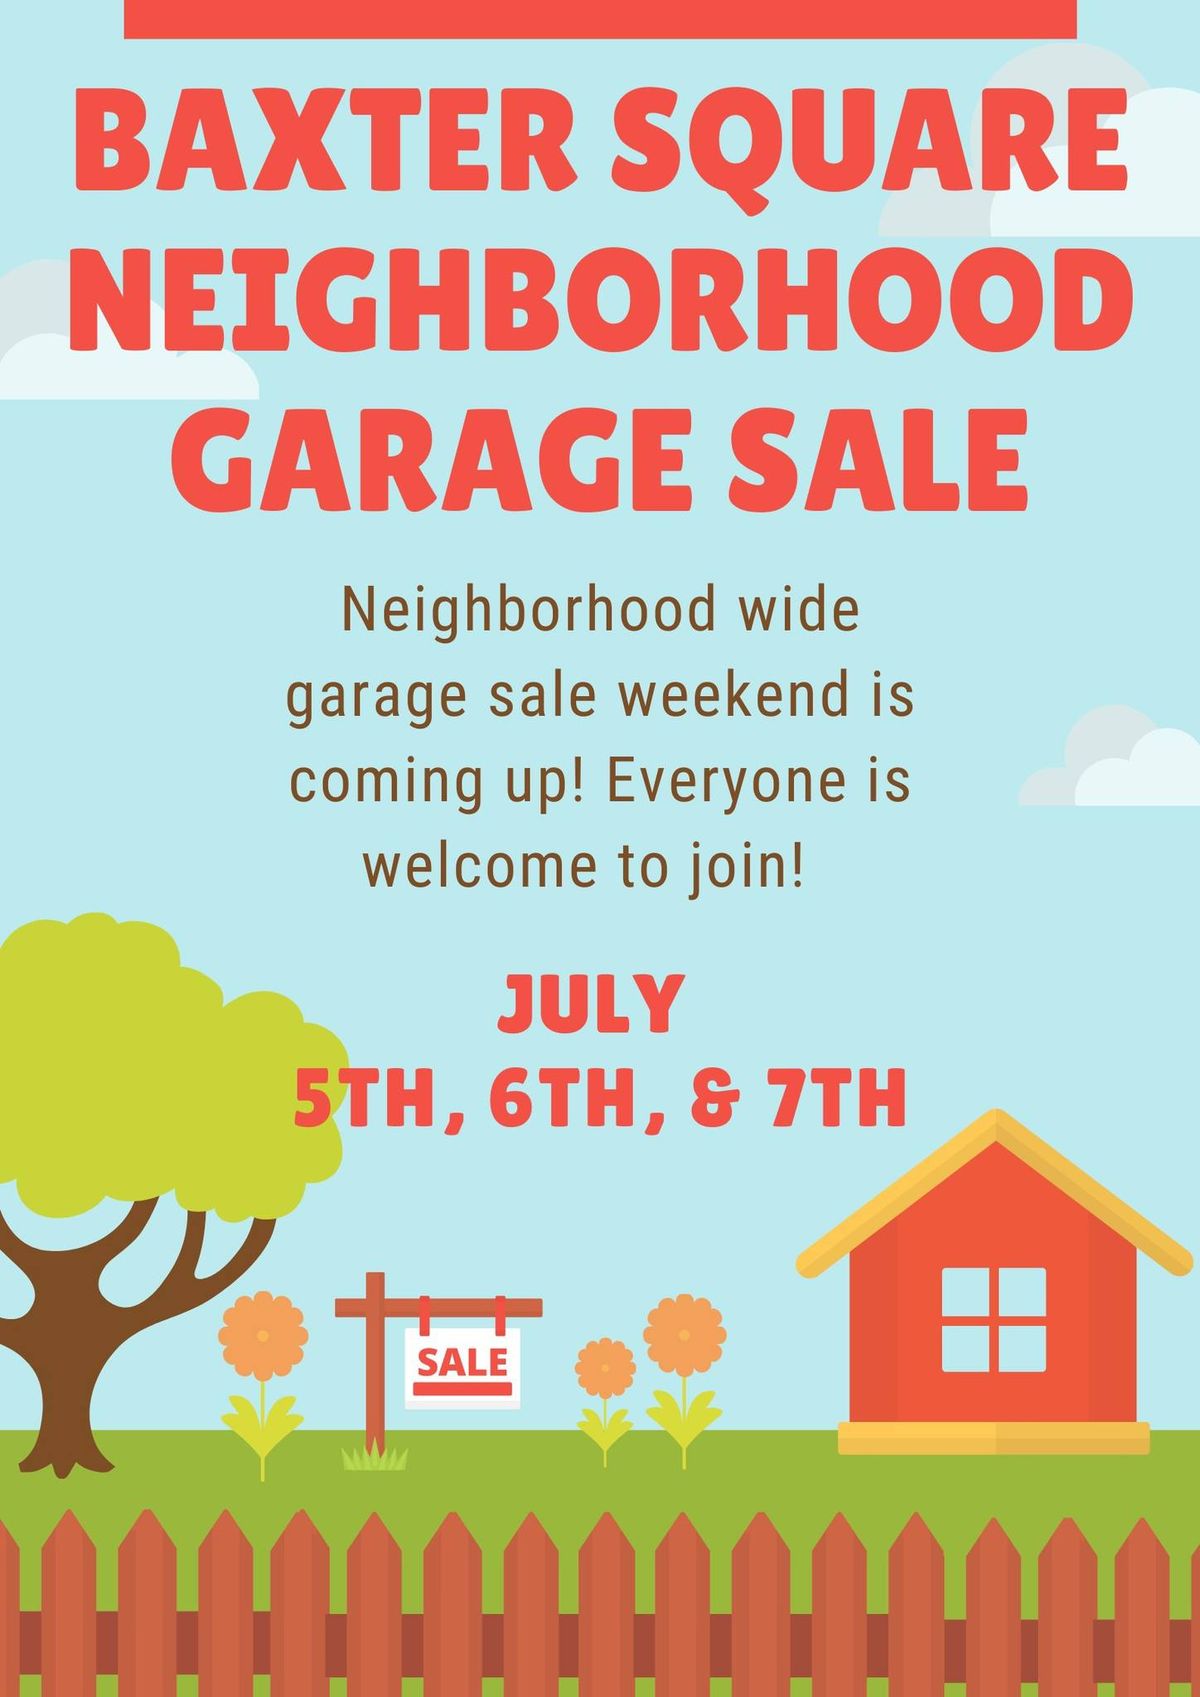 Baxter Square neighborhood garage sales! 